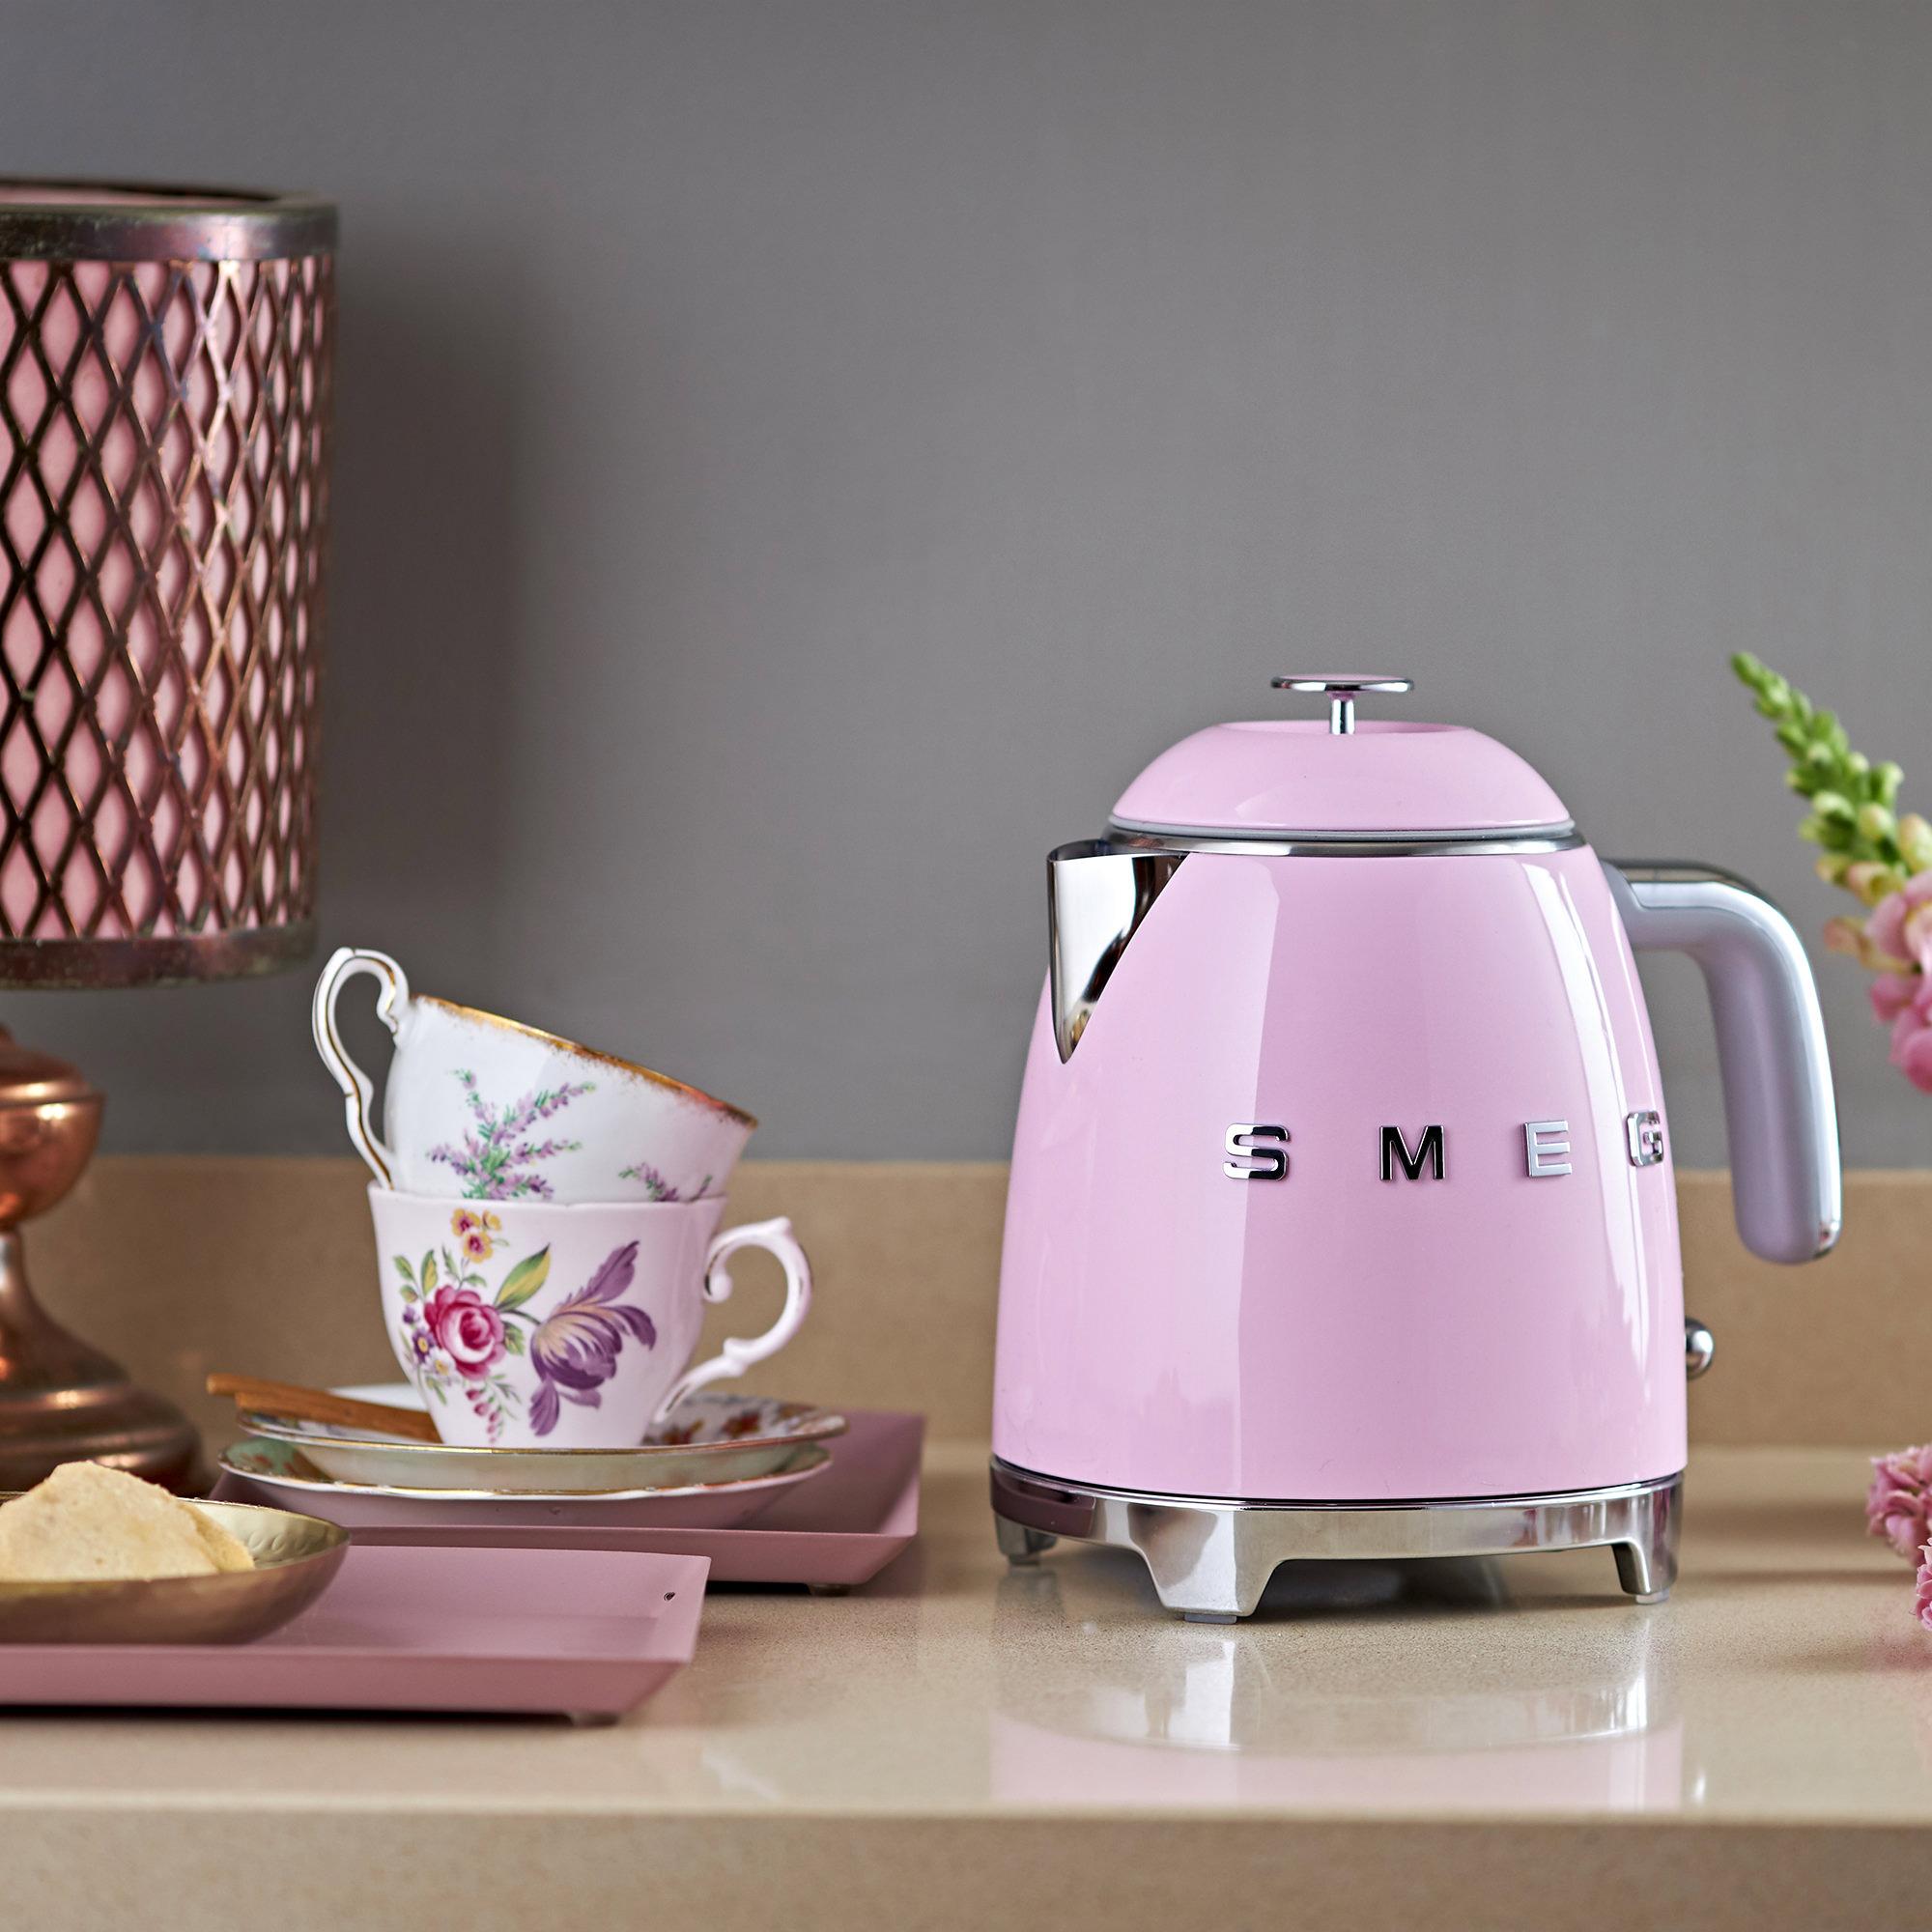 Smeg 50's Retro Style Mini Kettle 800ml Pastel Pink Image 3